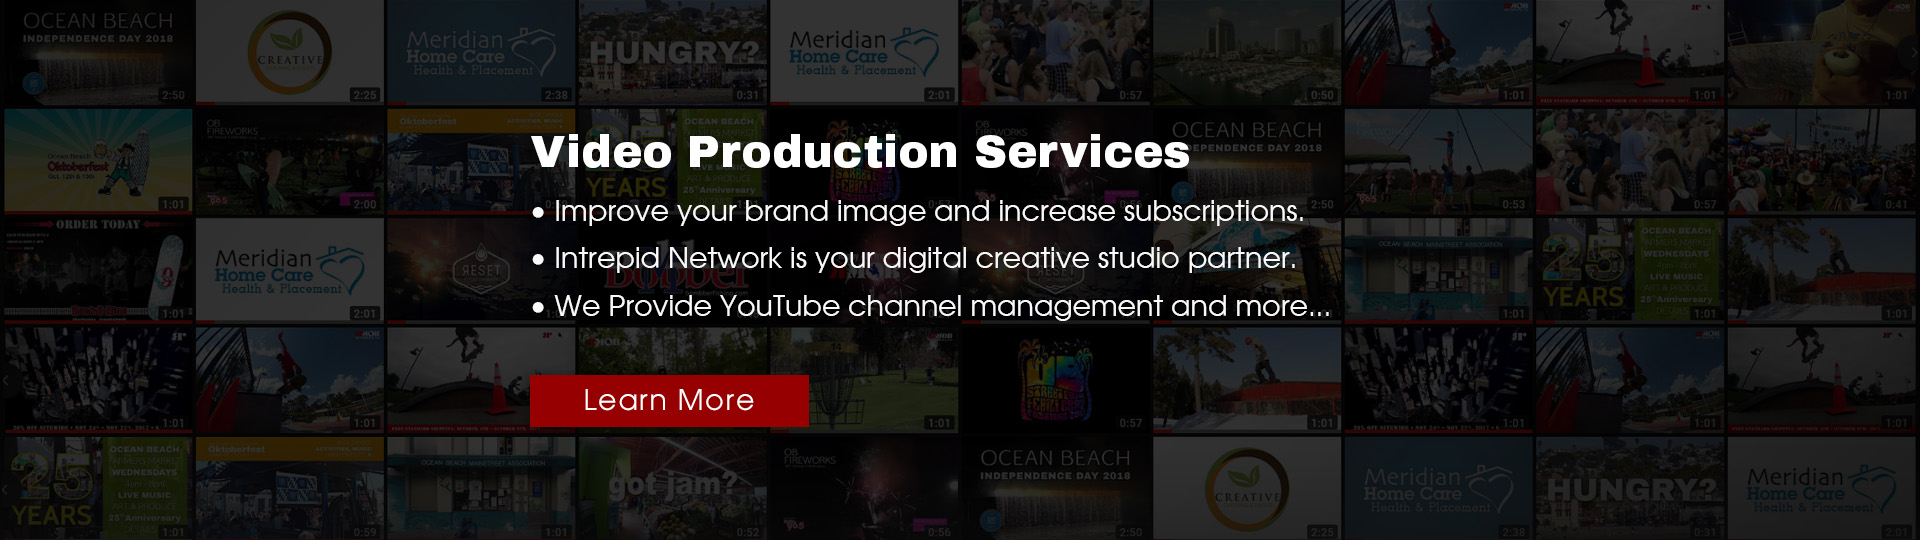 Video Content Production Services